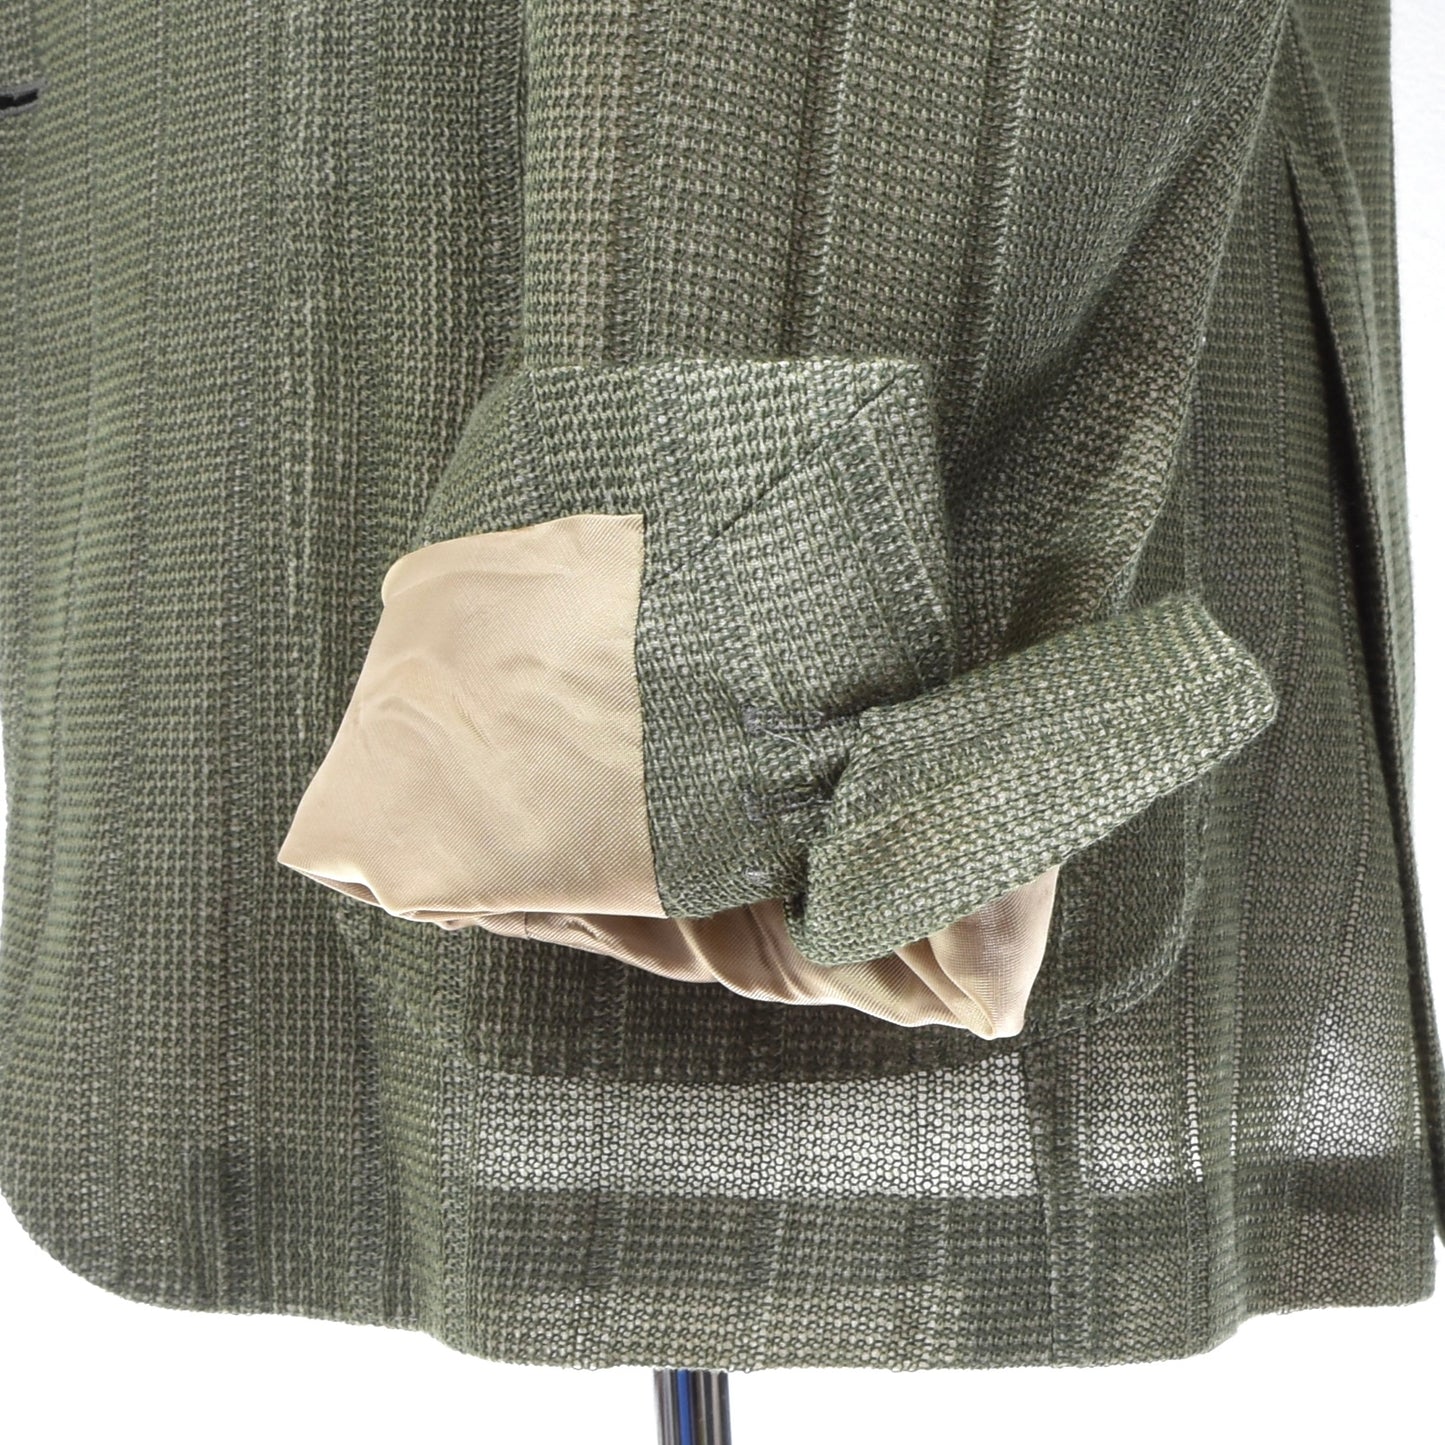 Lardini Cotton Jacket Size 48 - Green